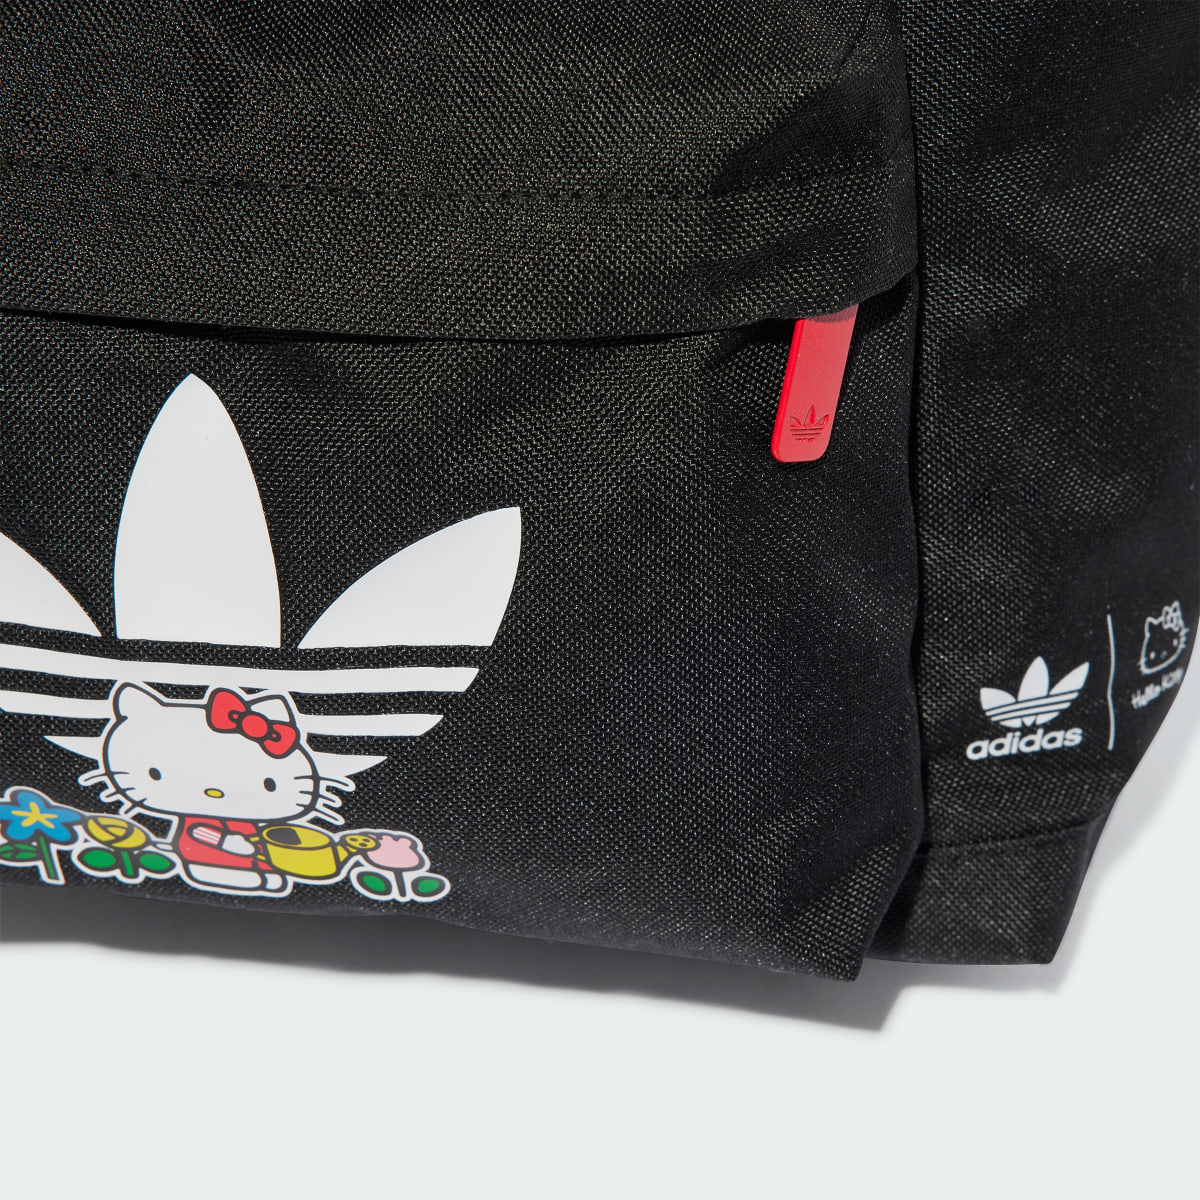 Adidas Sac à dos adidas x Hello Kitty Enfants. 7